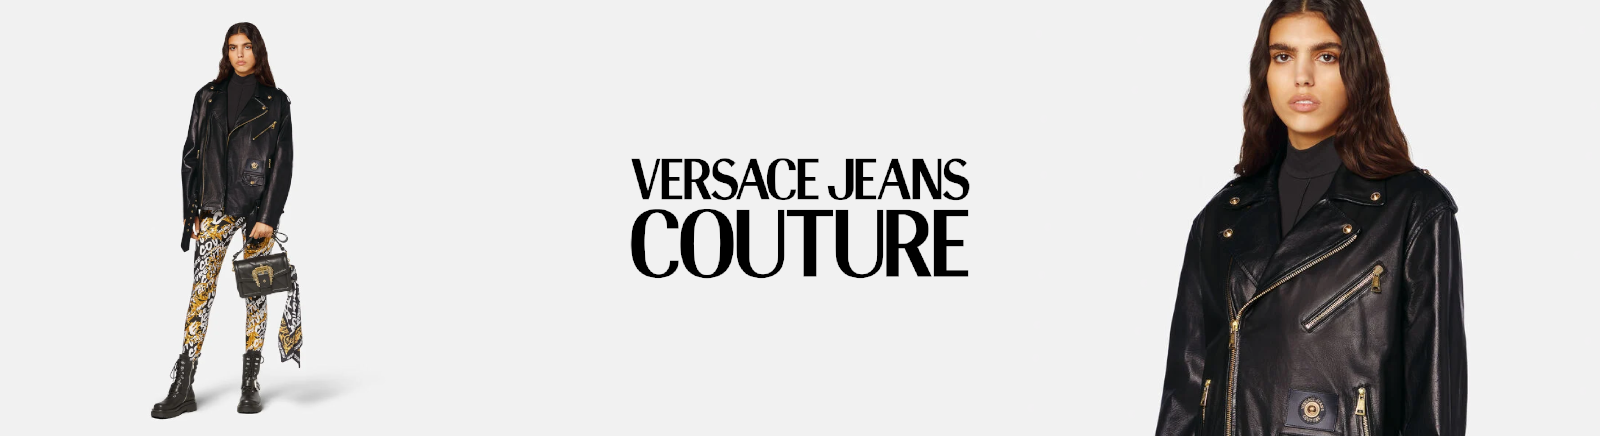 Versace Jeans Markenschuhe online bestellen im Prange Schuhe Shop